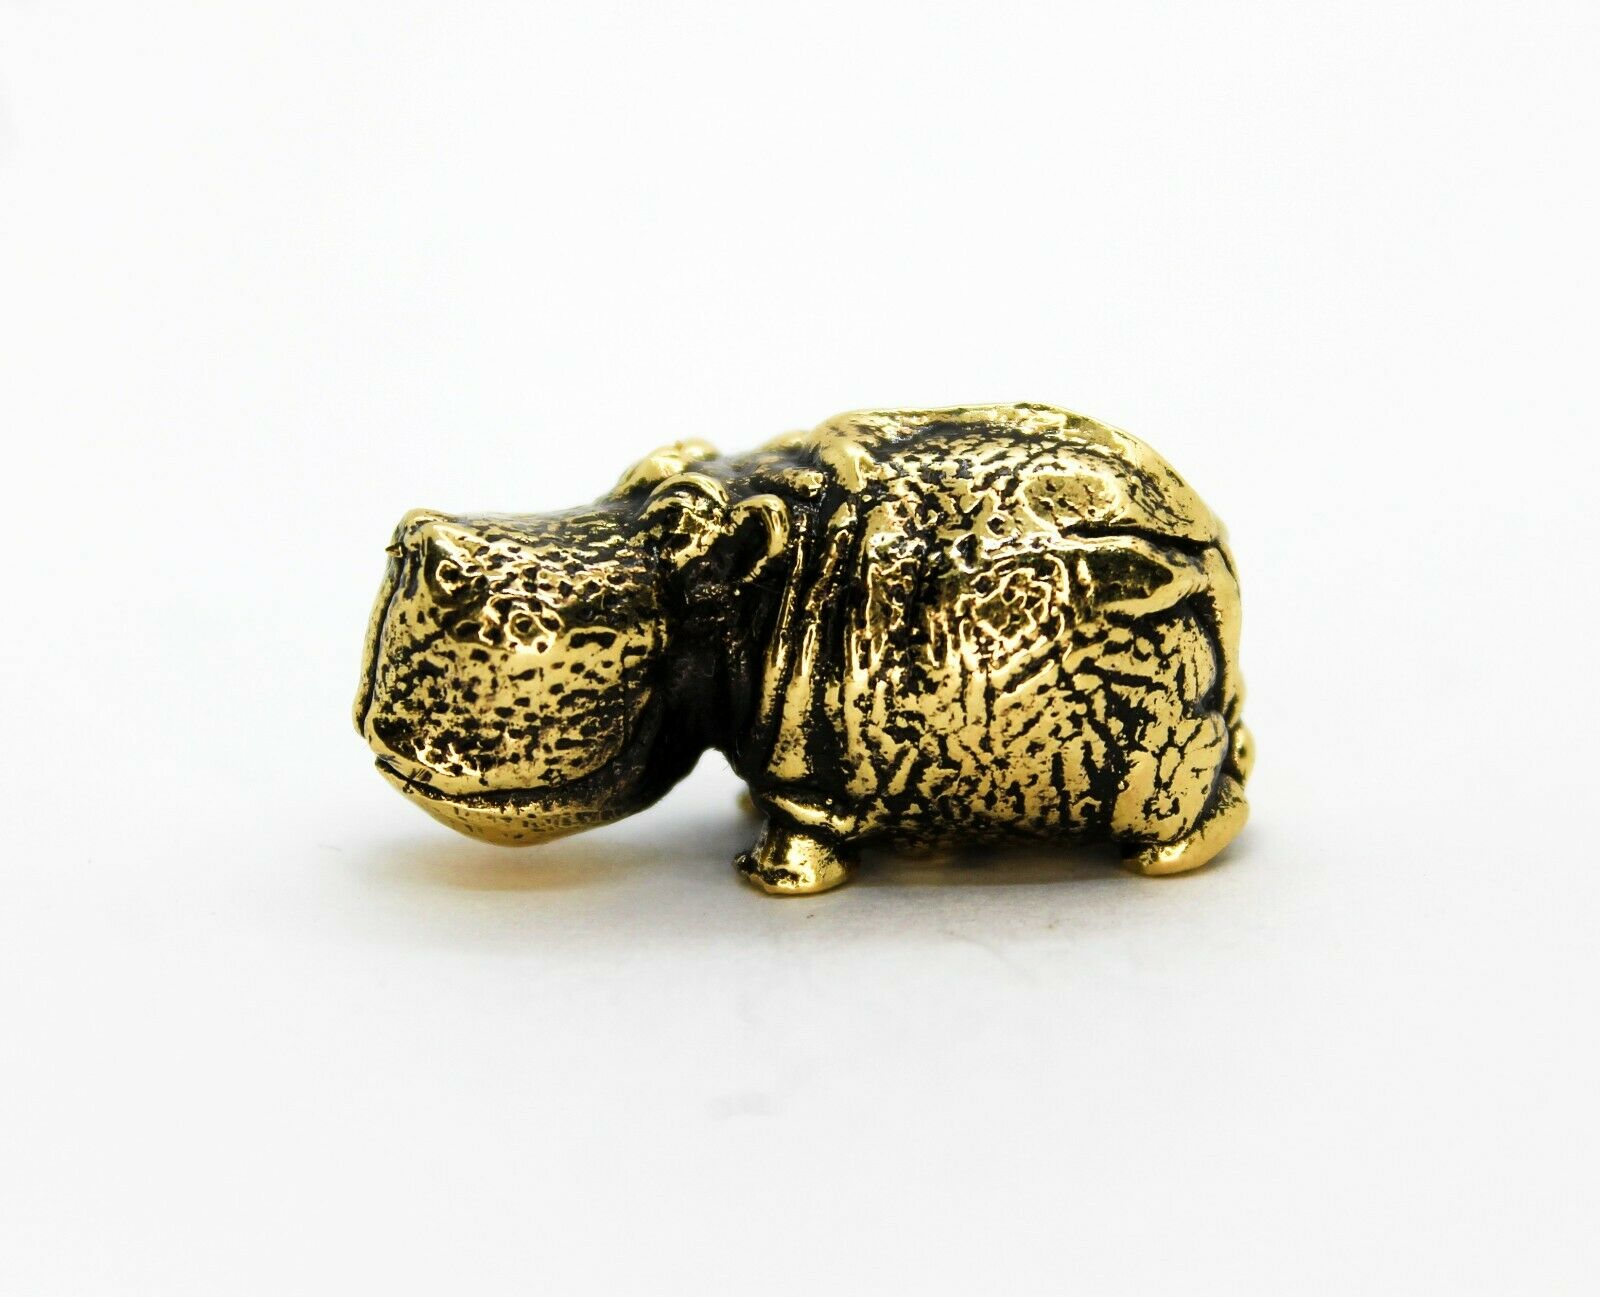 Hippo Figurine, Brass Collectible Small Animal Miniature, Handmade Desktop Decor